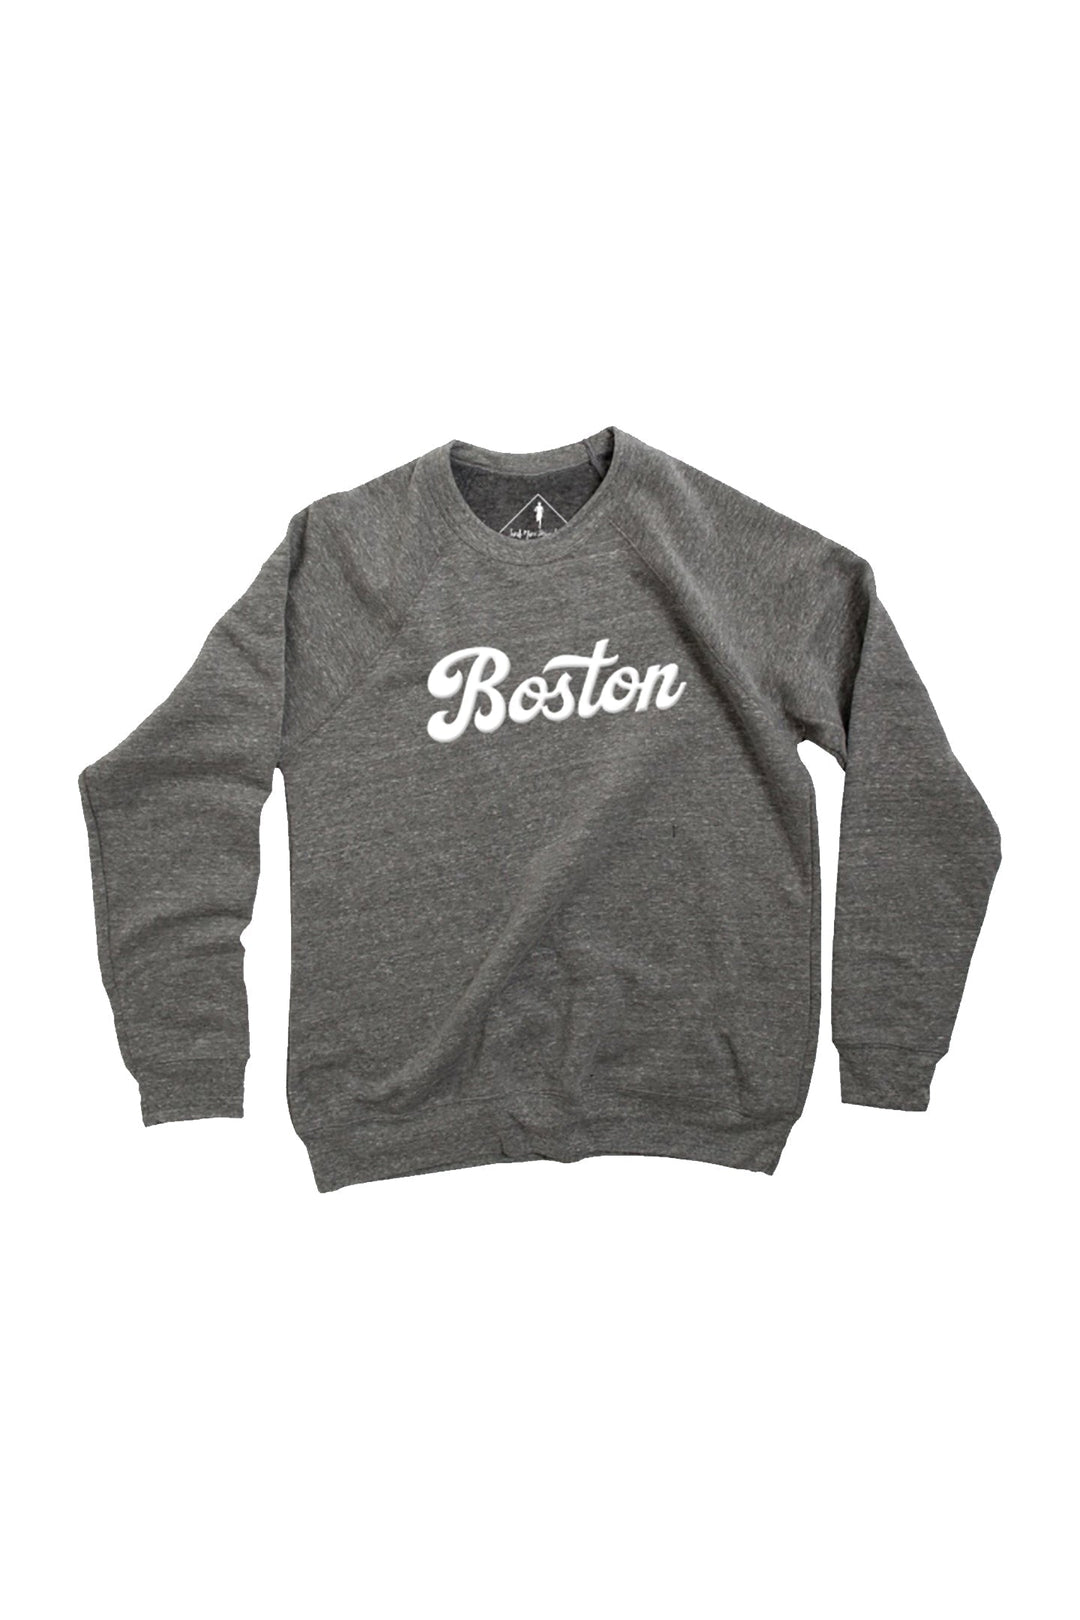 Sarah Marie Design Studio Sweatshirt XSmall / Grey Triblend Boston Sweatshirt